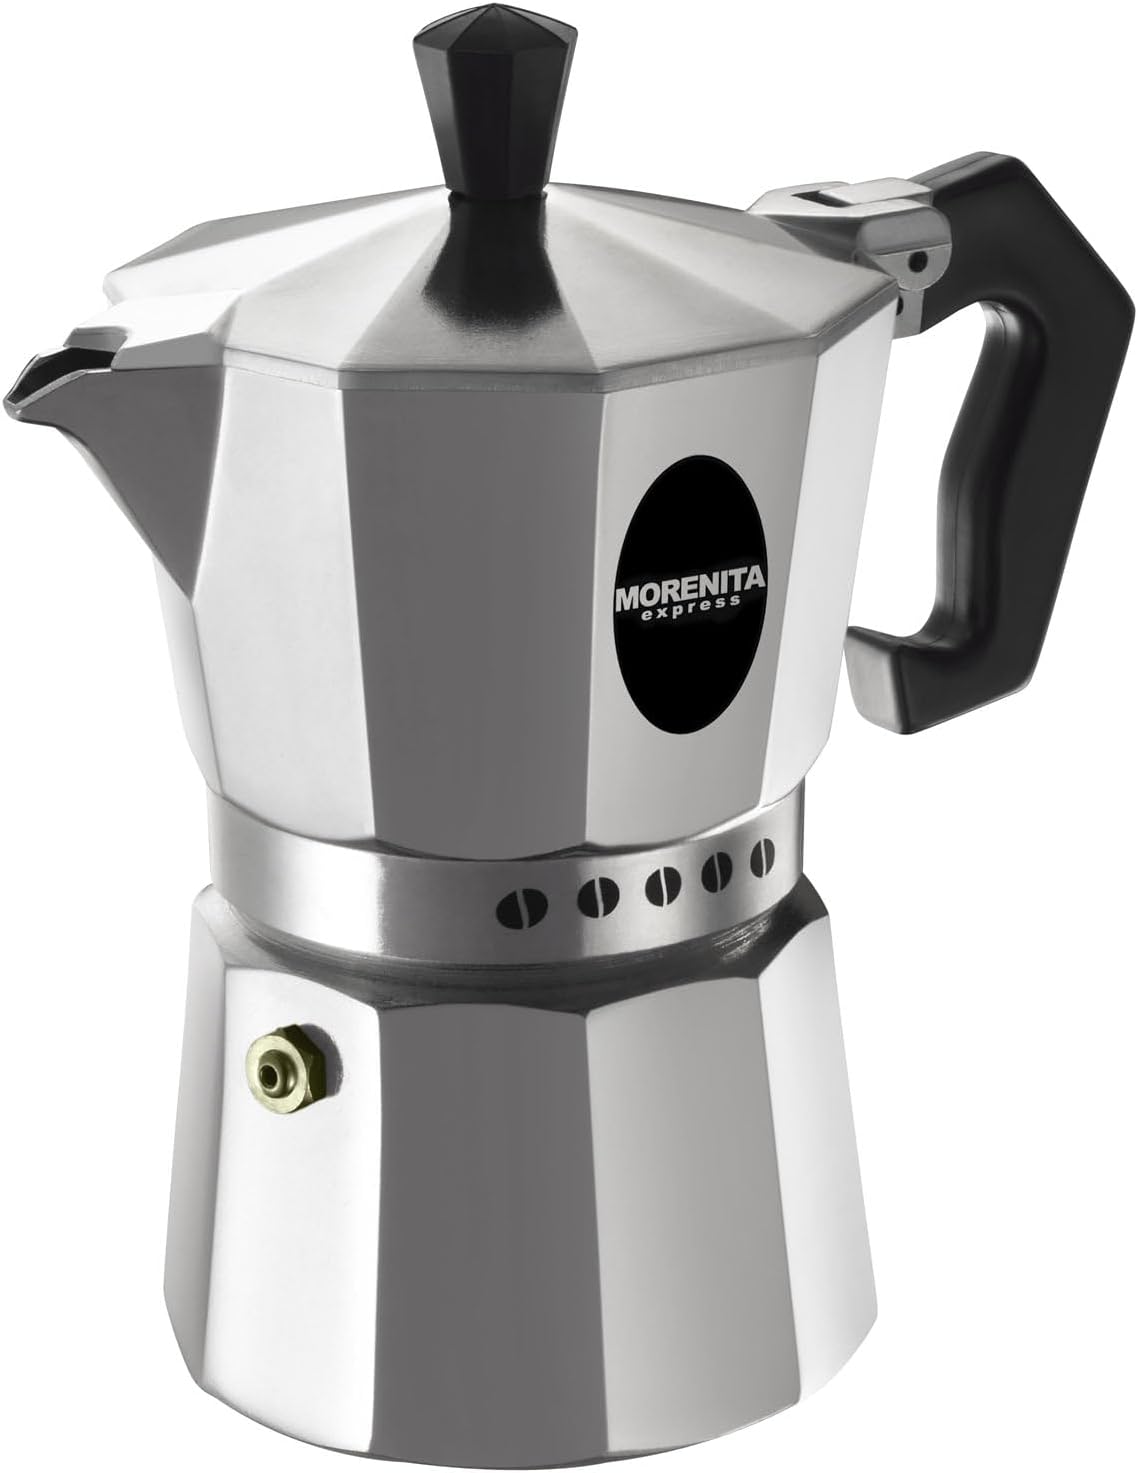 Aeternum 5973 Morenita espresso maker made of aluminum for 6 cups, silver